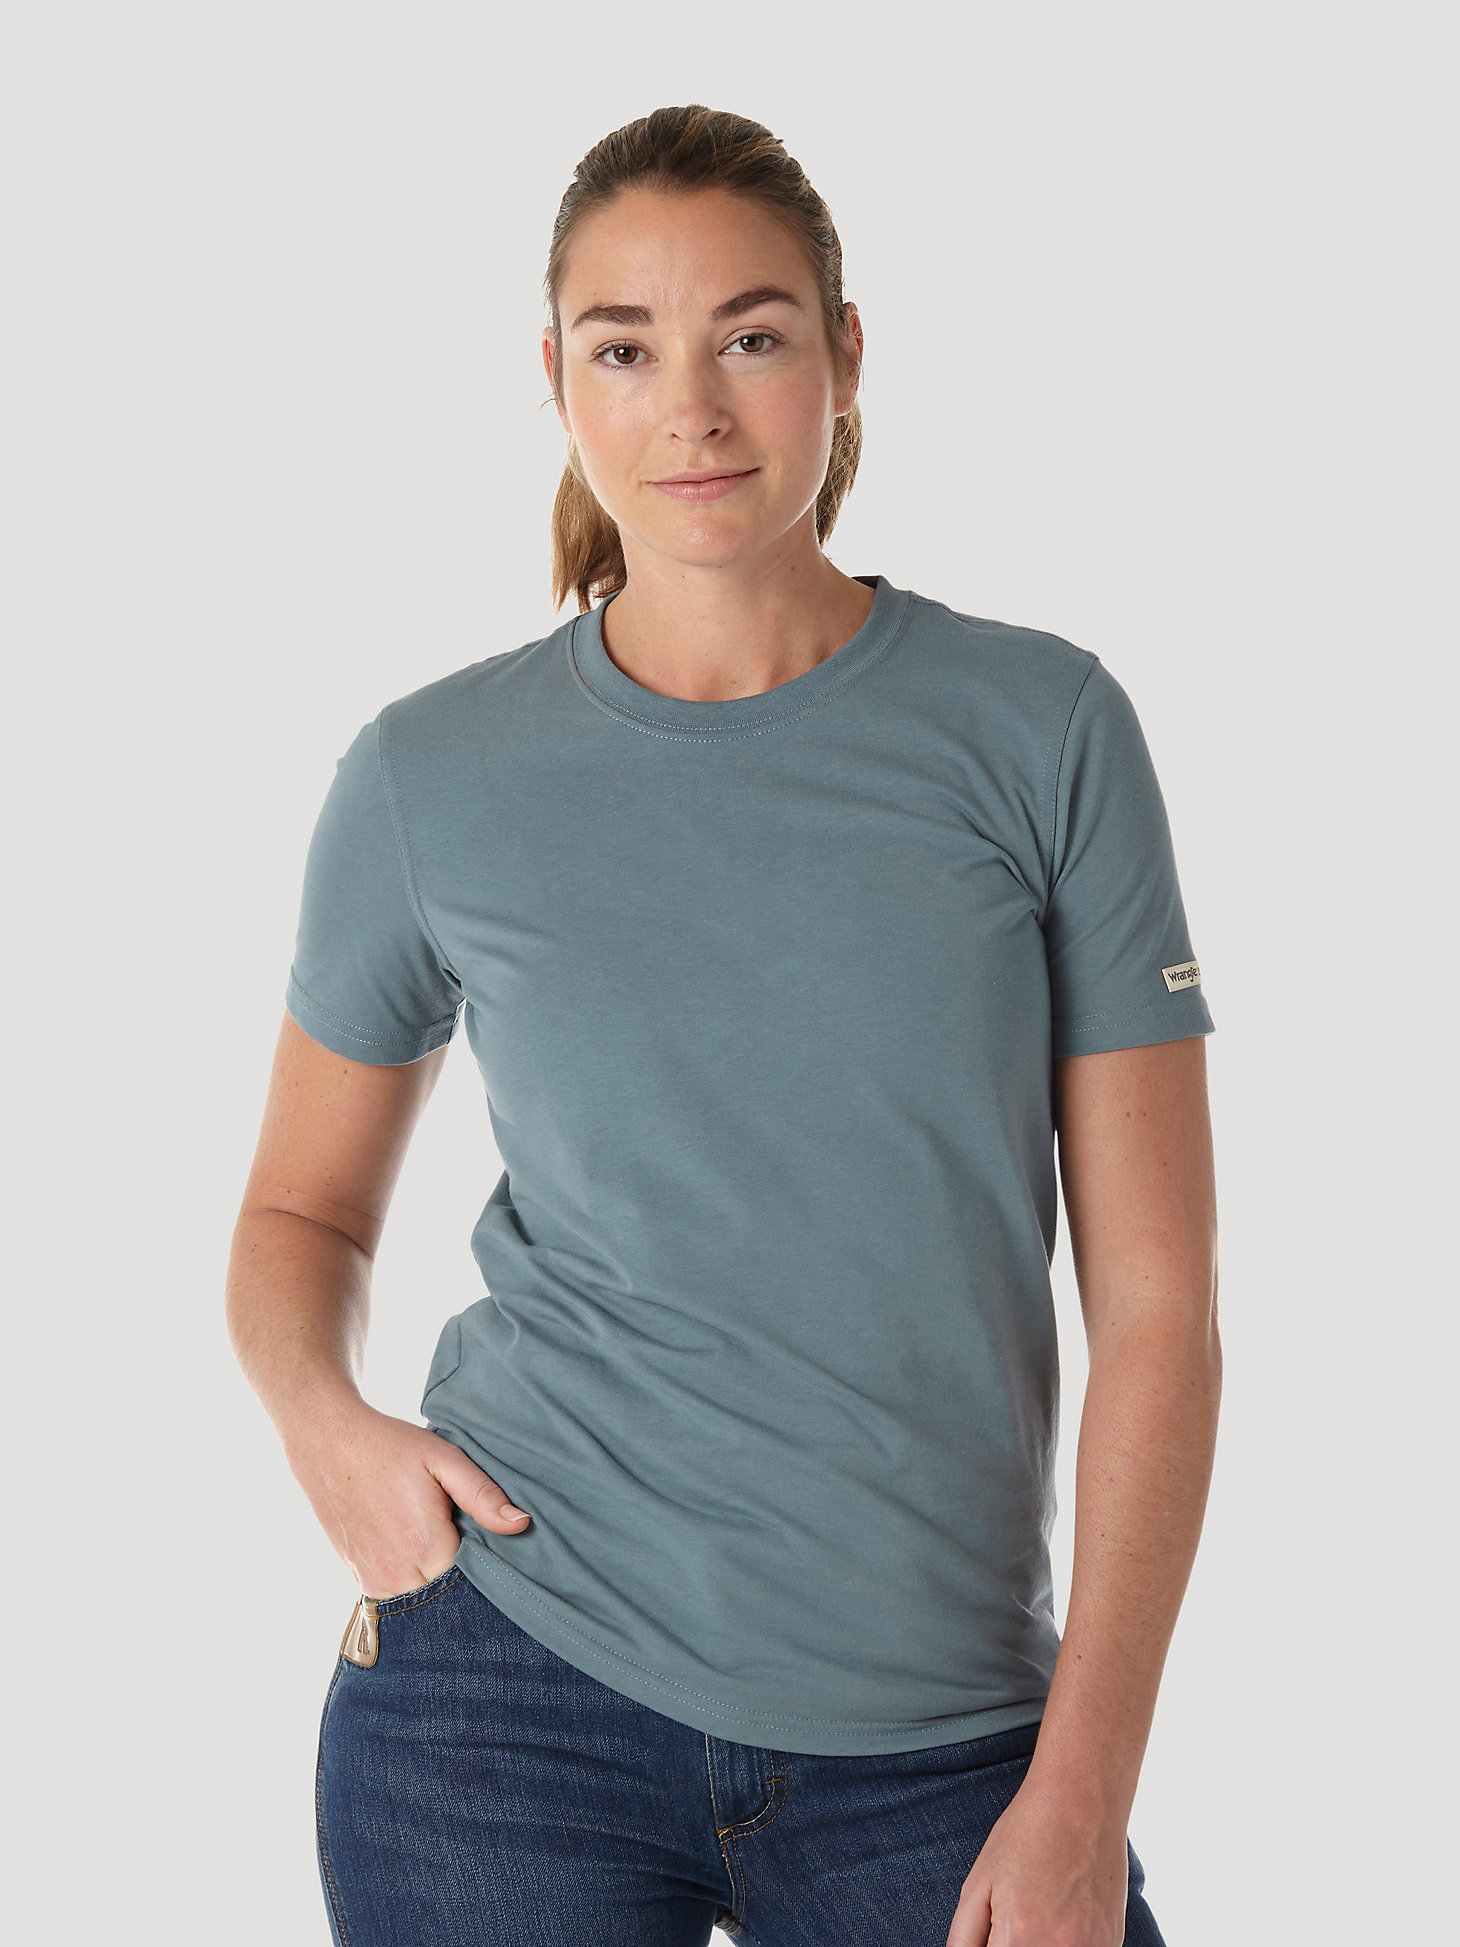 Women's Wrangler® RIGGS Workwear® Short Sleeve Performance T-Shirt in Sea Green alternative view 1